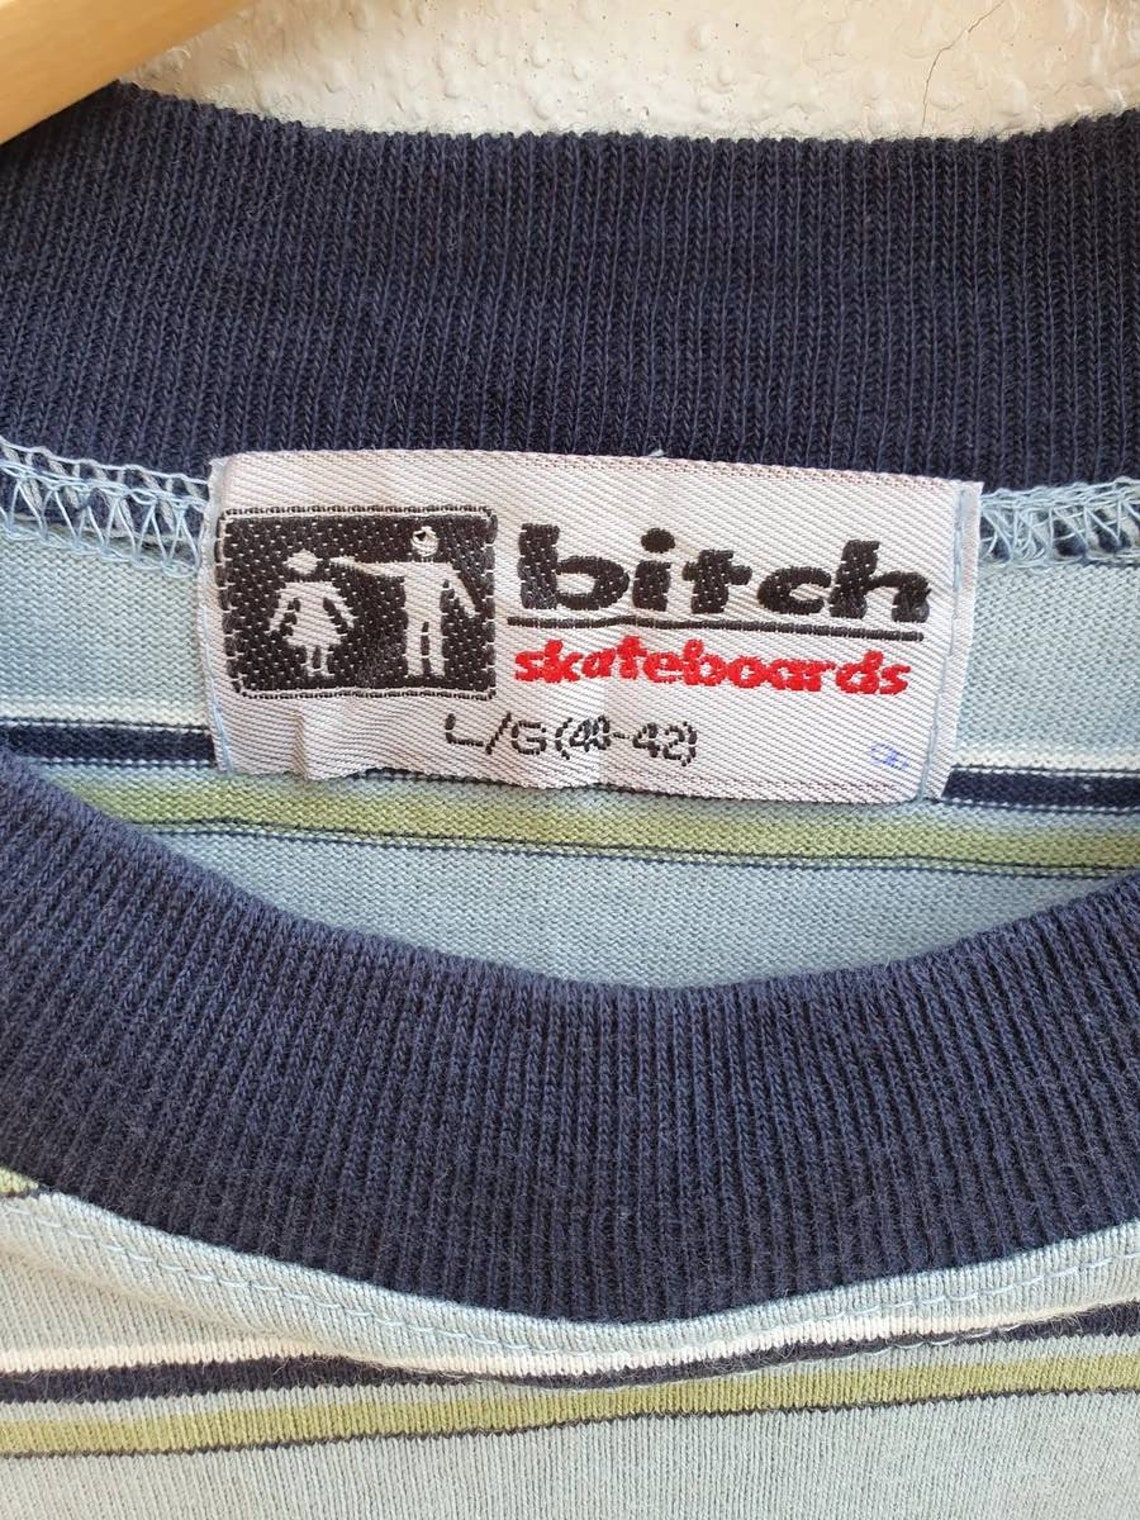 Vintage Bitch Skateboard Stripes Surfing Style Top T-shirts | Etsy